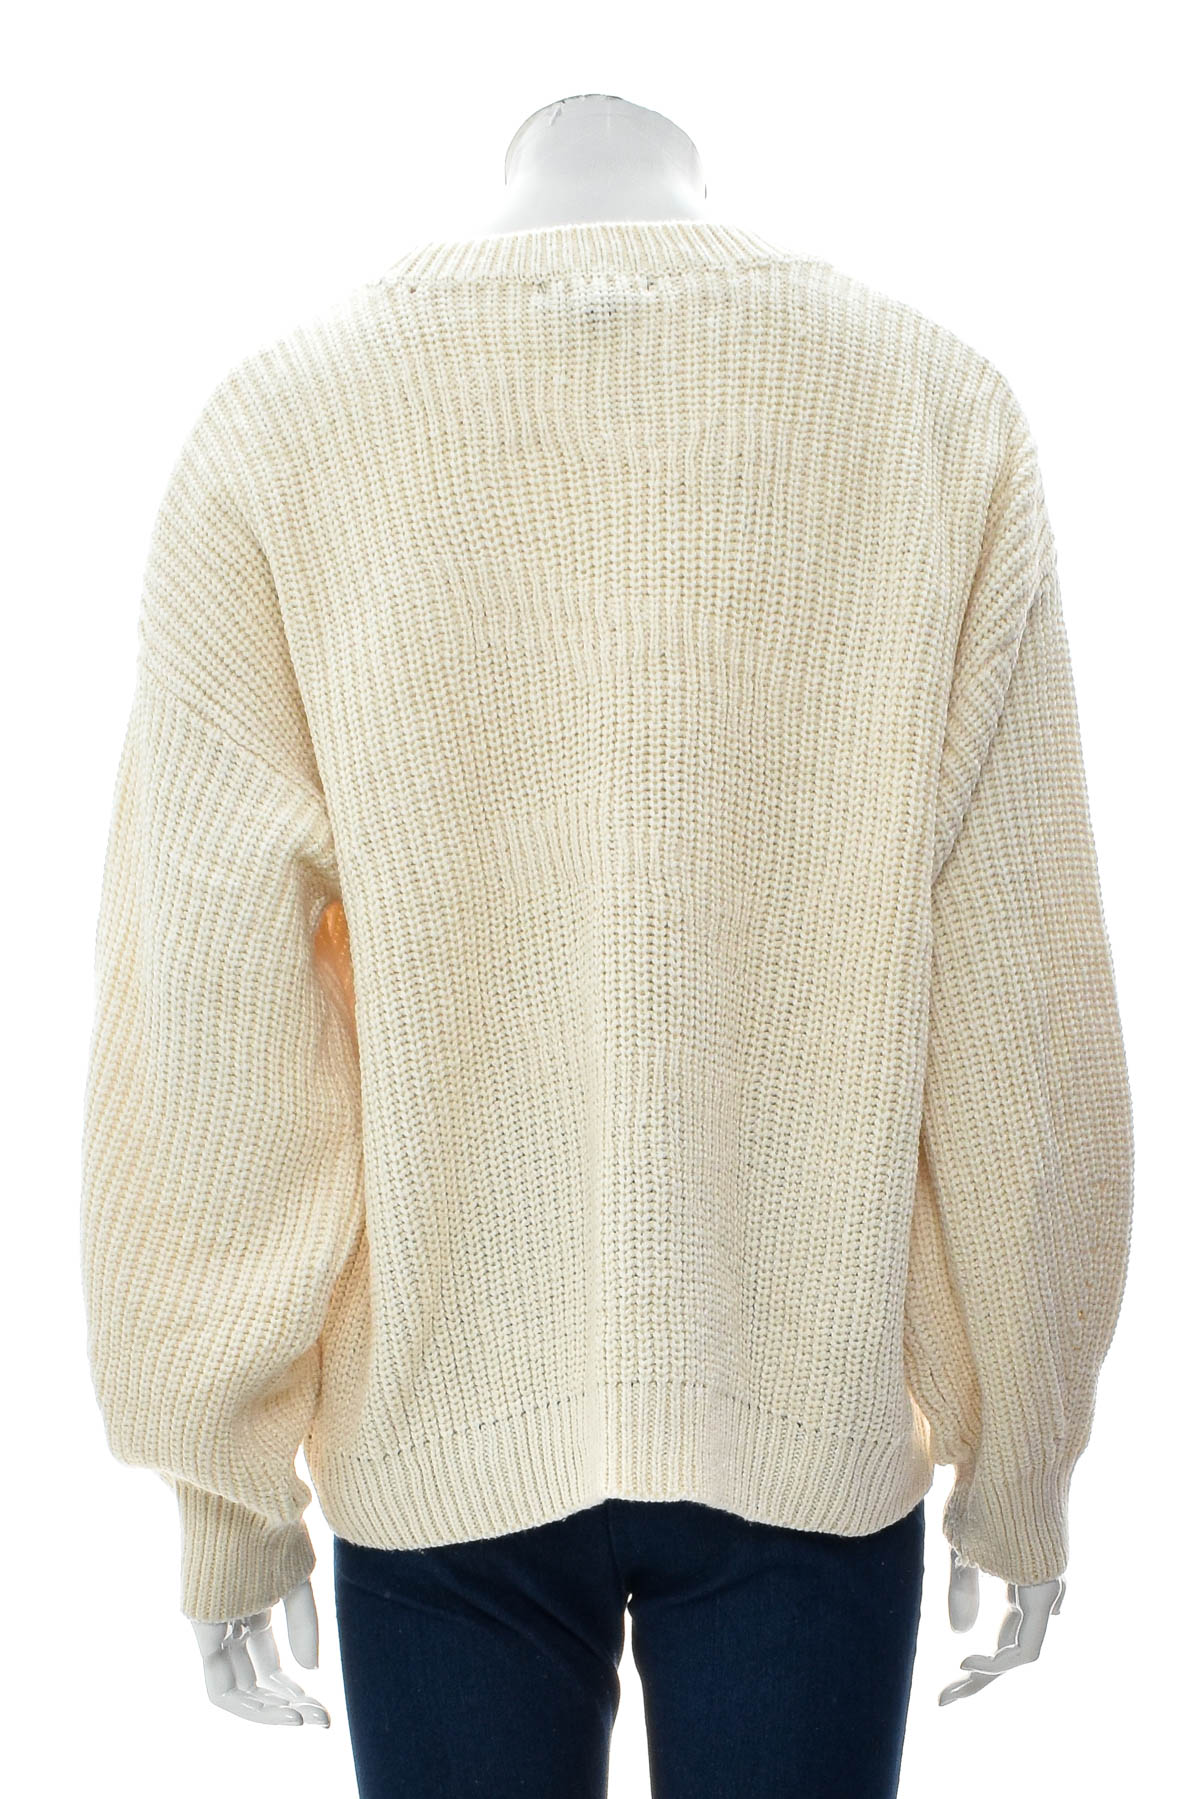 Дамски пуловер - New Look - 1